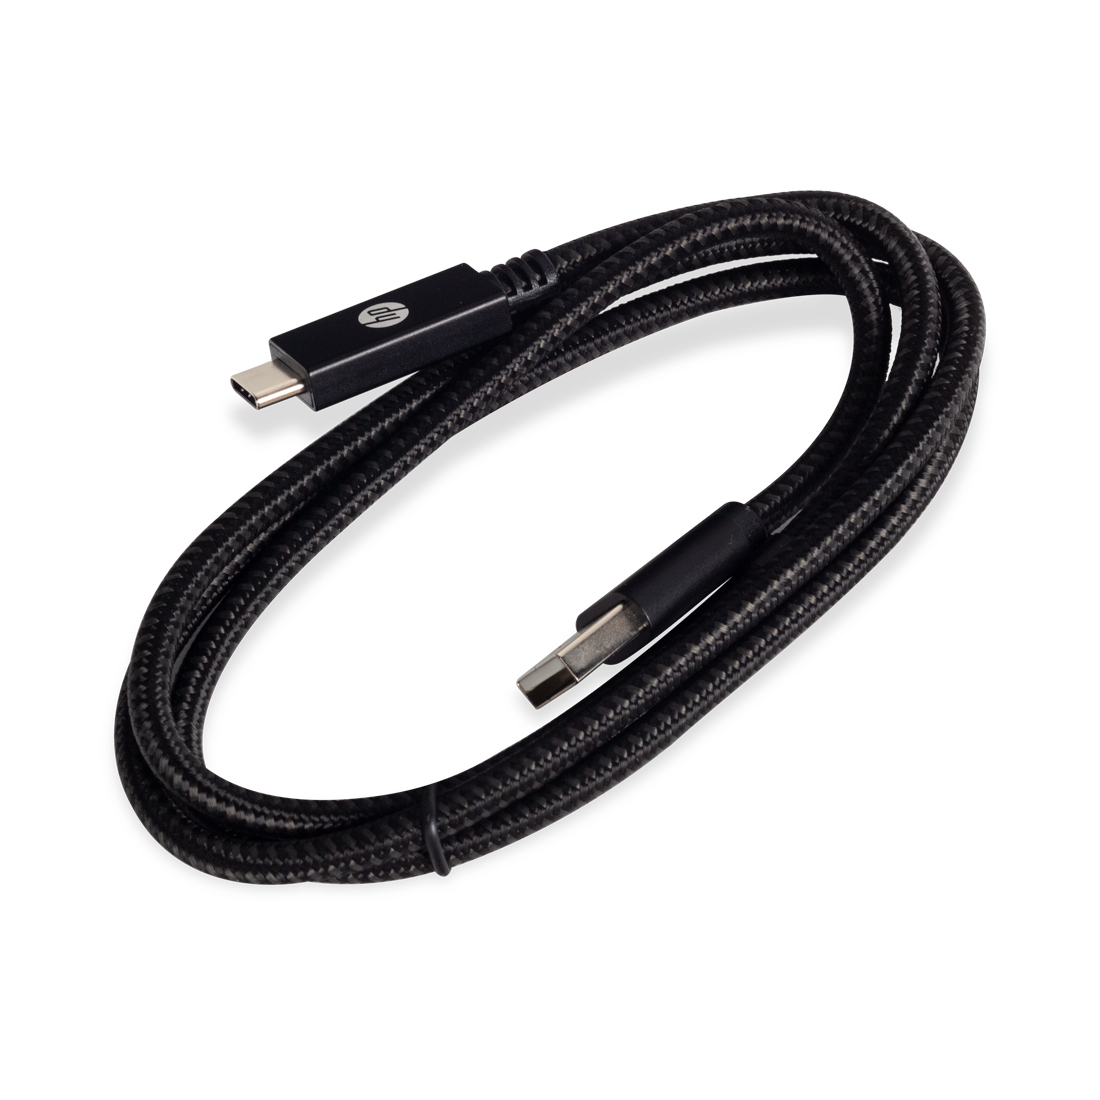 картинка Интерфейсный кабель HP Pro USB-C to USB-A v2.0 BLK 1.0m от магазина itmag.kz